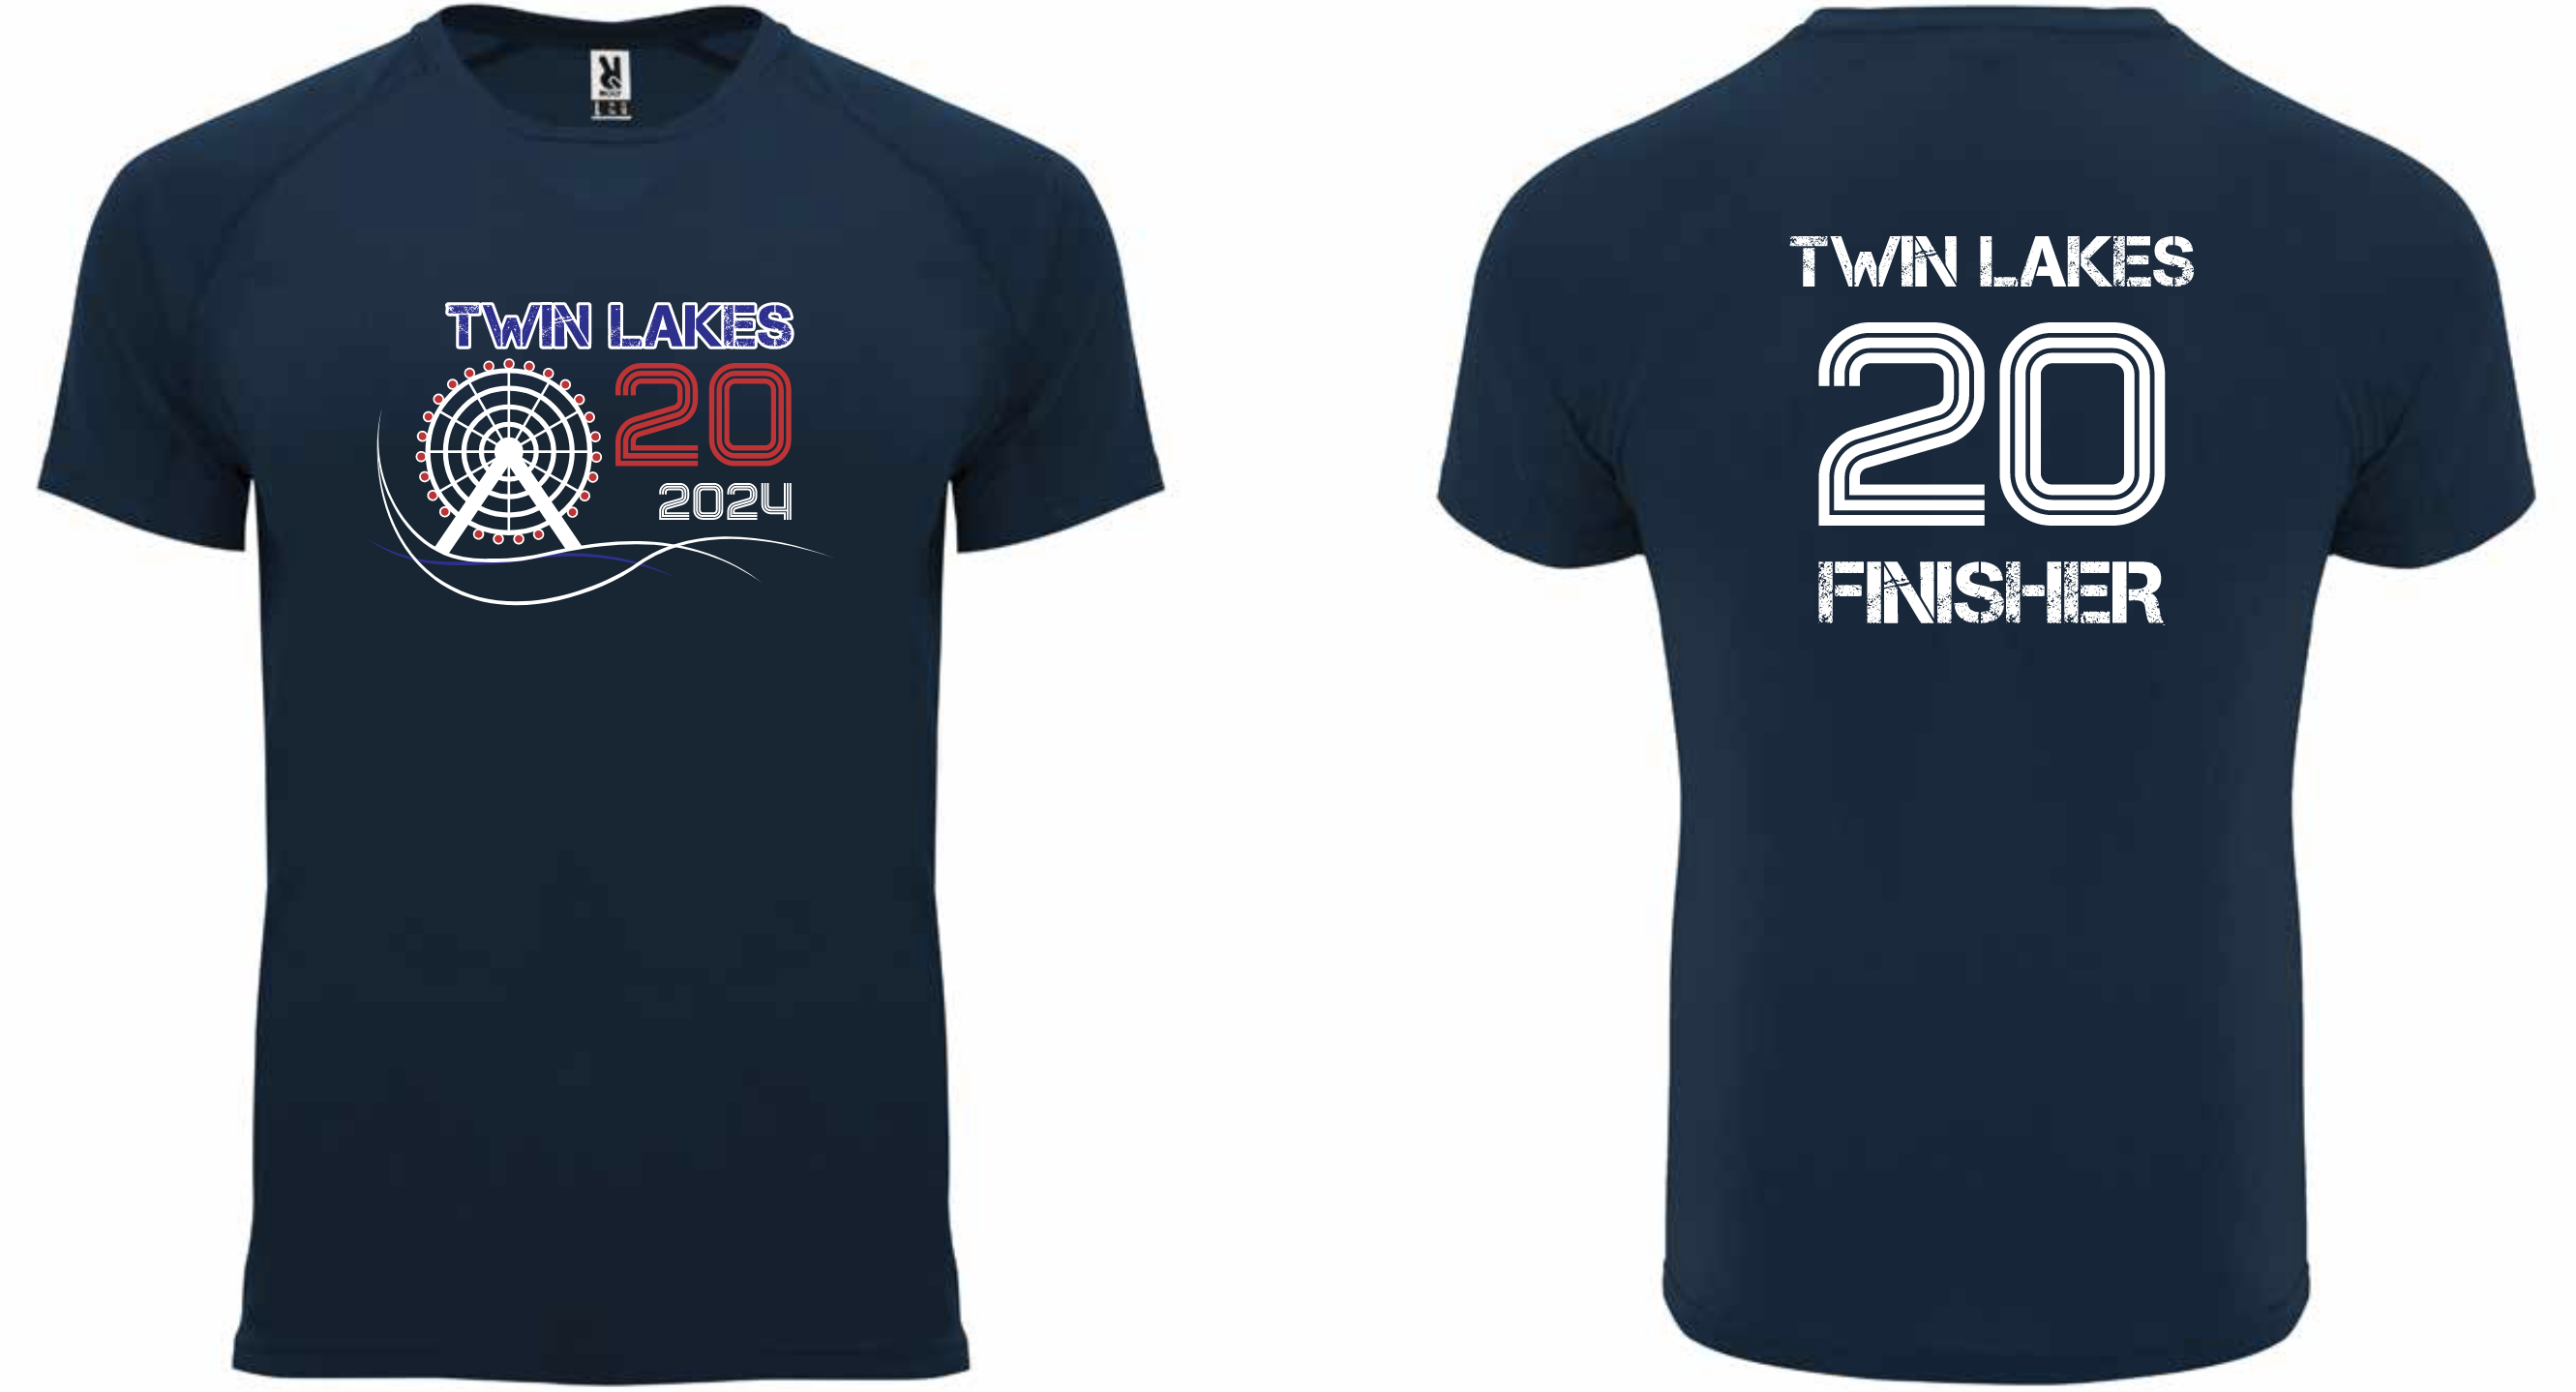 TWIN LAKES 20 - 2024 finisher t-shirt